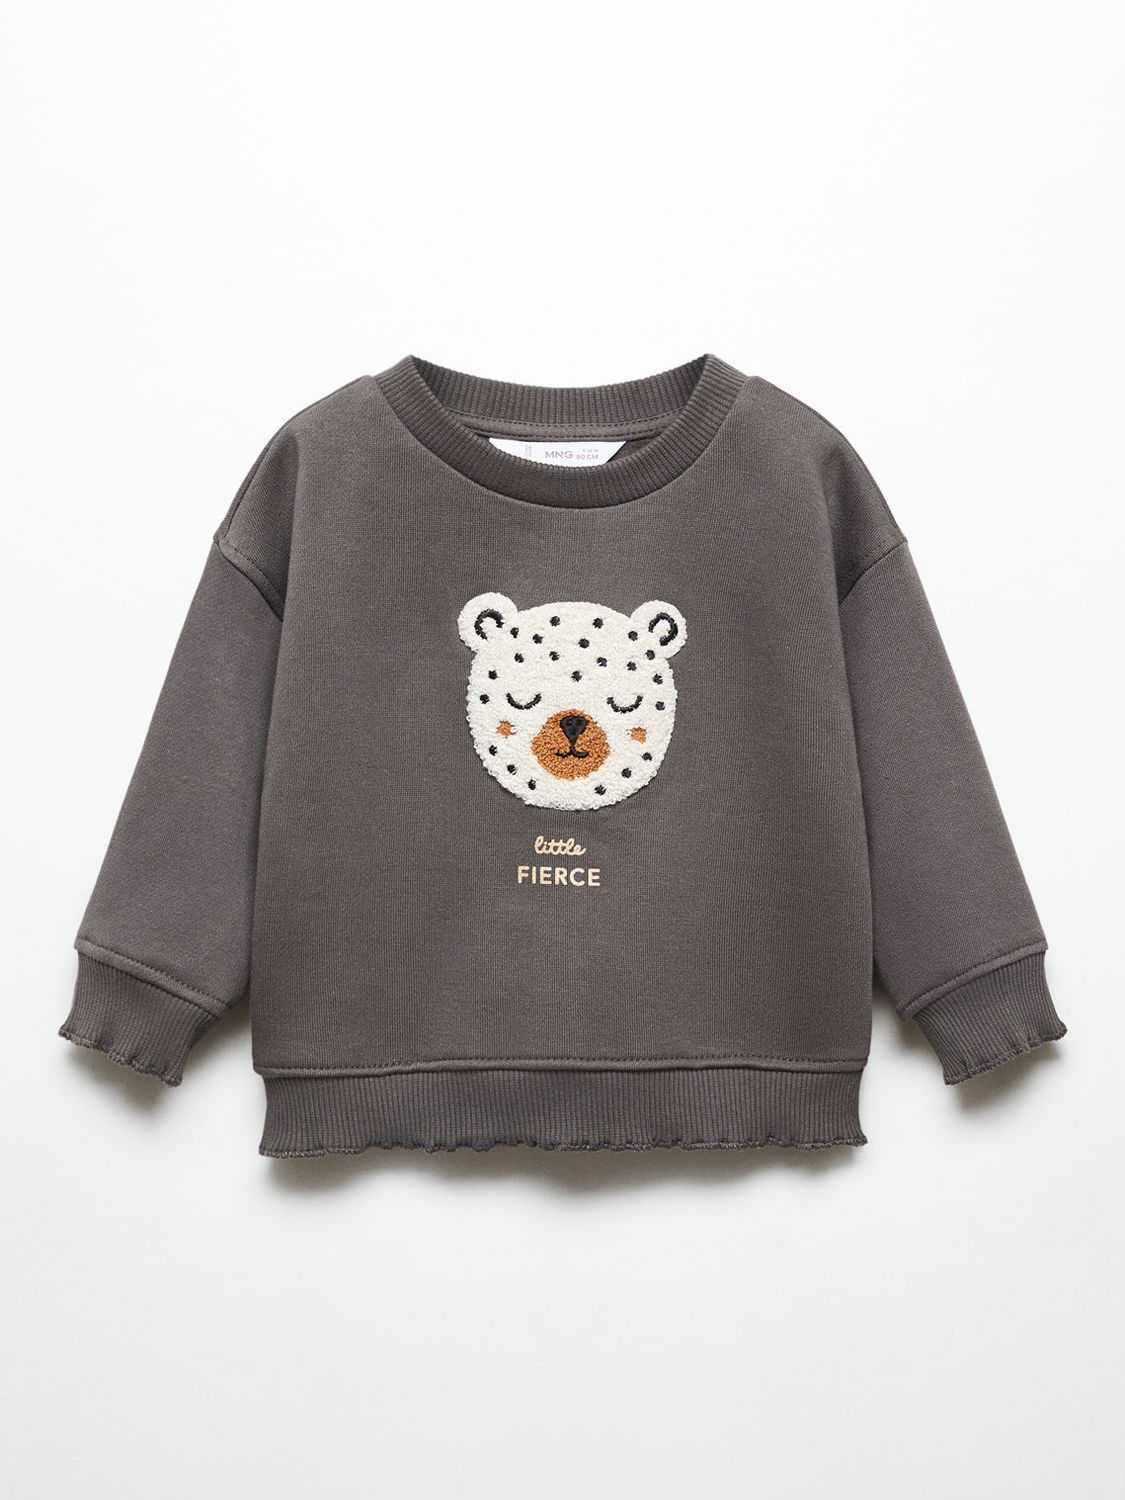 Mango Baby Fierce Applique Sweatshirt, Charcoal at John Lewis & Partners